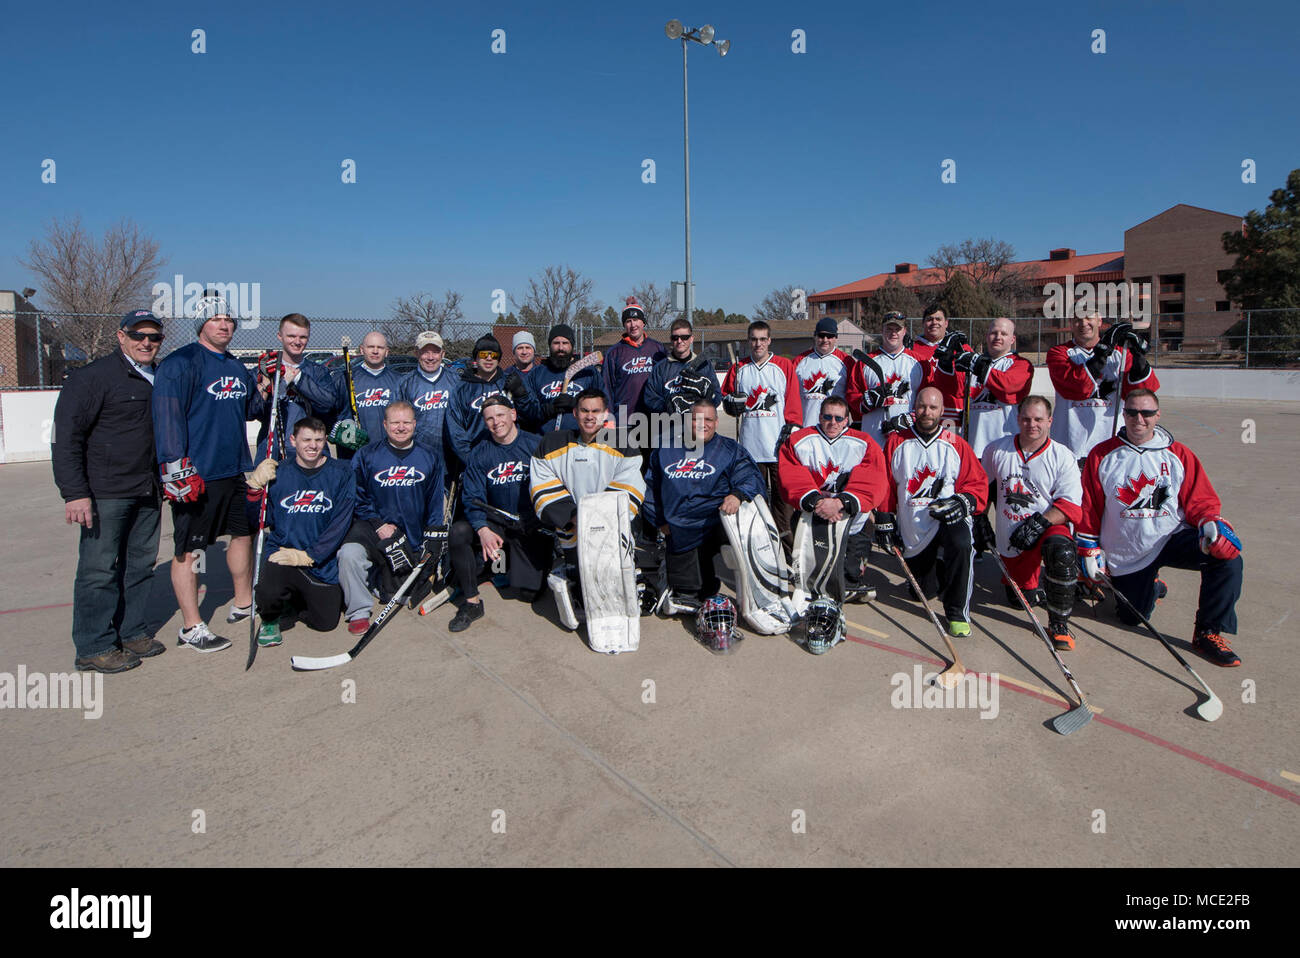 Team North America - Ball Hockey